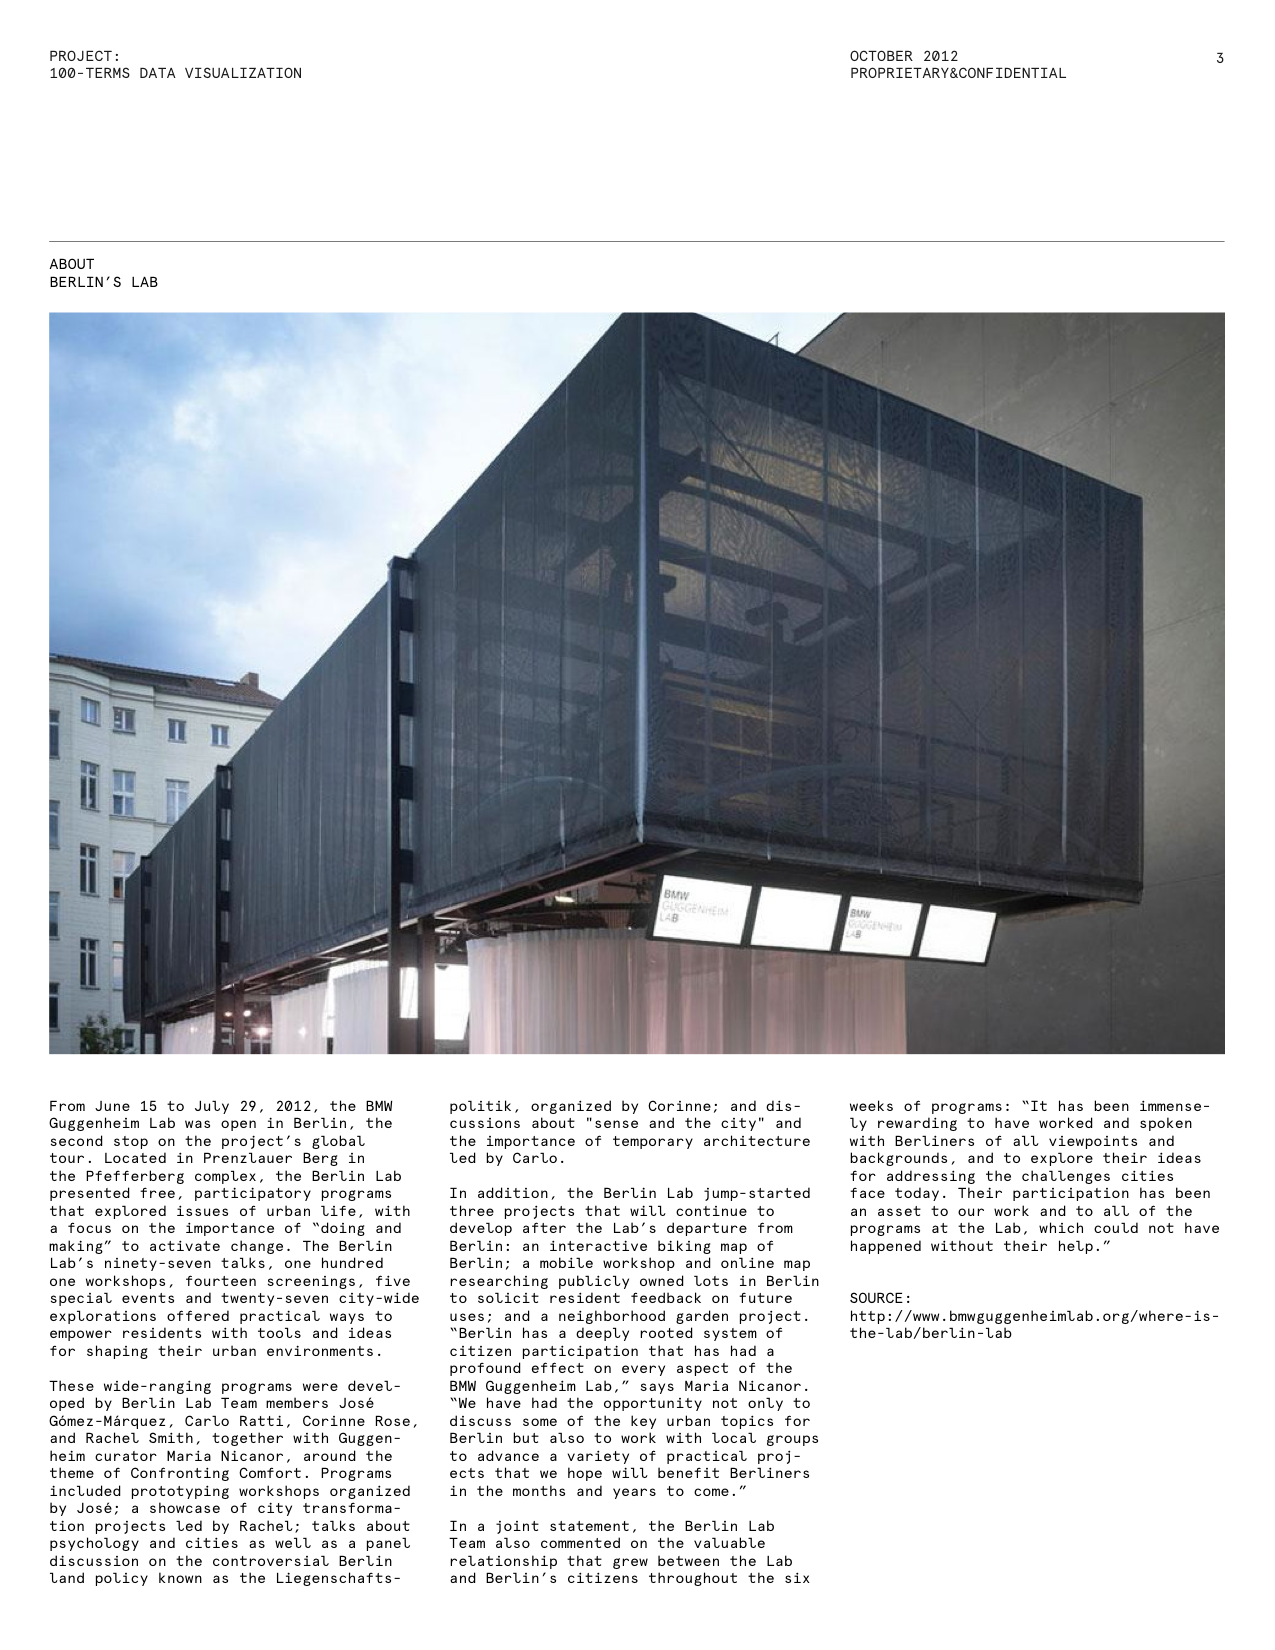 BMW Guggenheim Lab / 100 Urban Trends